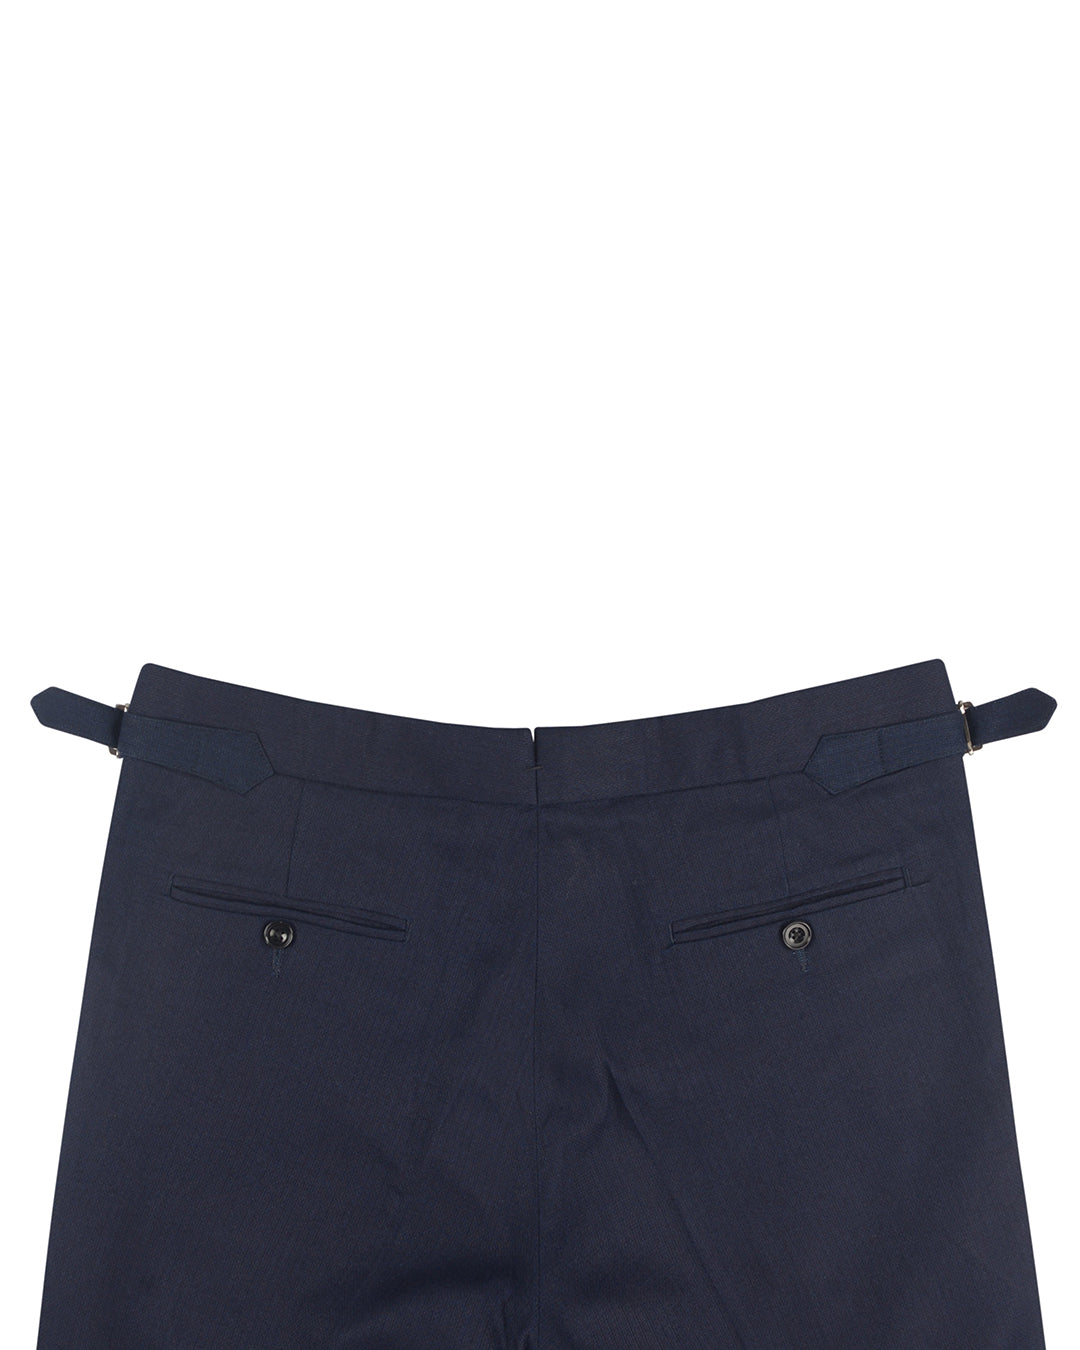 Summer Hopsack Navy Pants